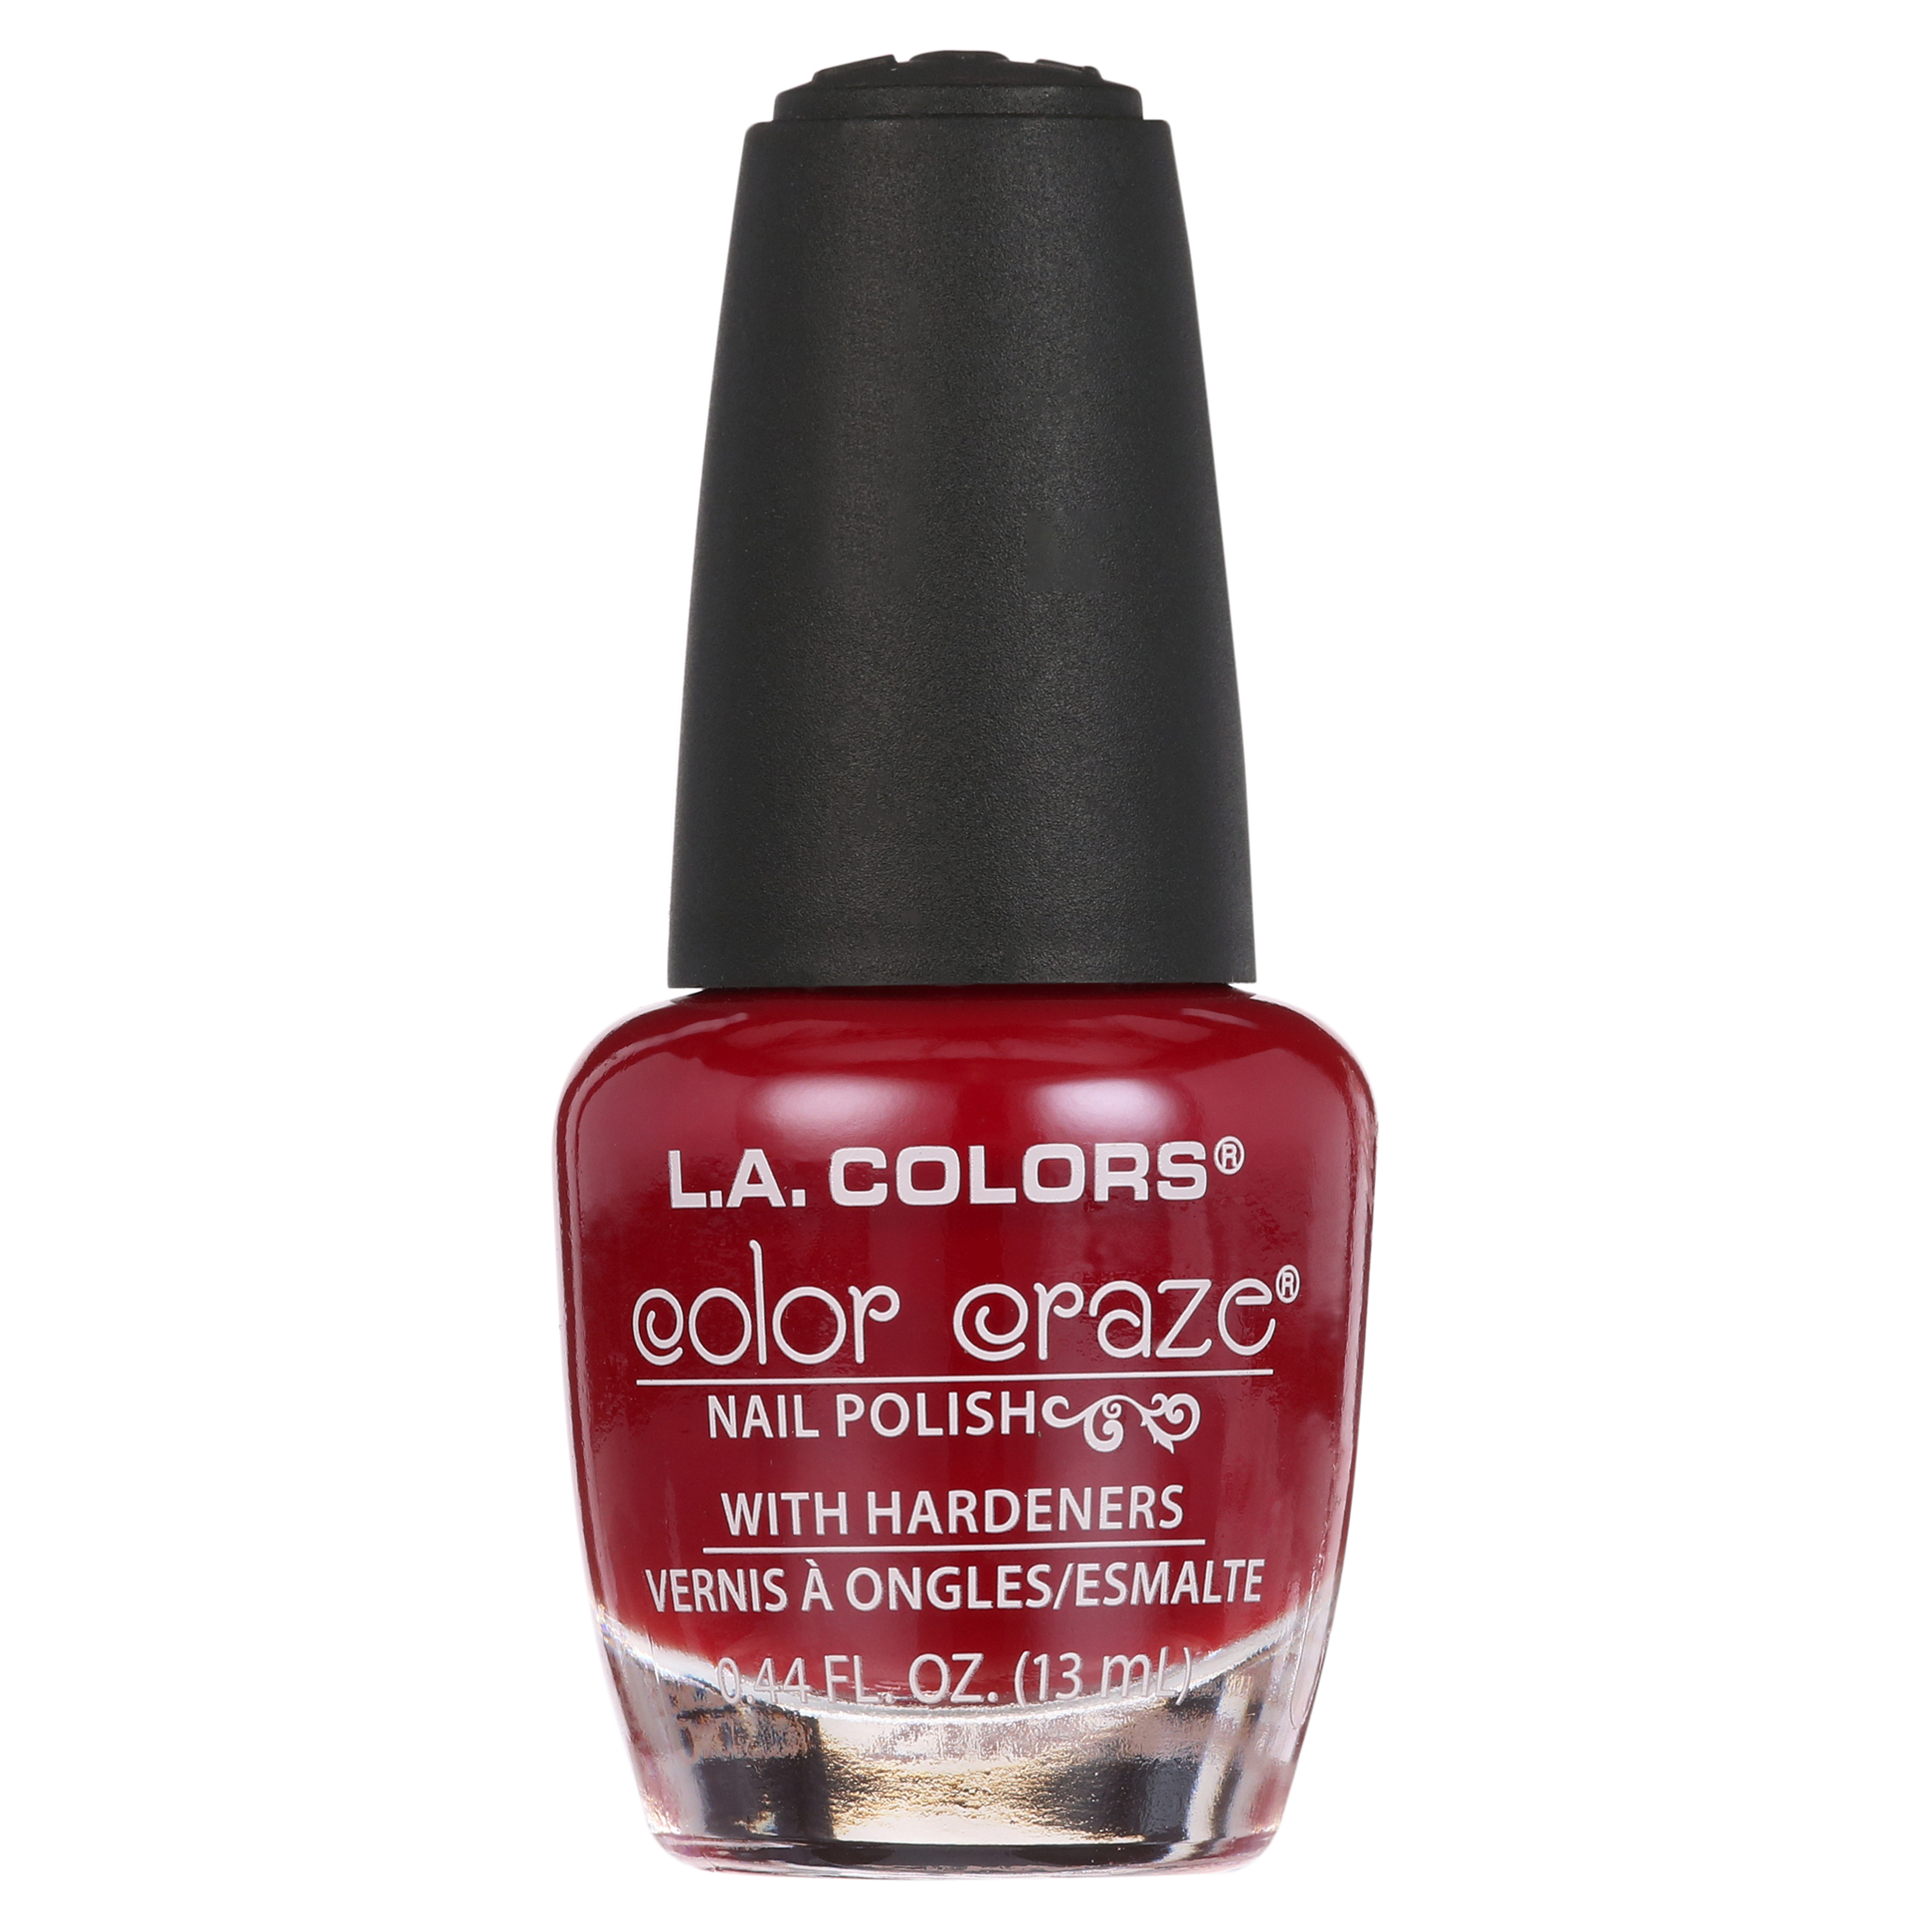 L.A. COLORS Color Craze Nail Polish, Hot Blooded, 0.44 fl oz - image 4 of 8